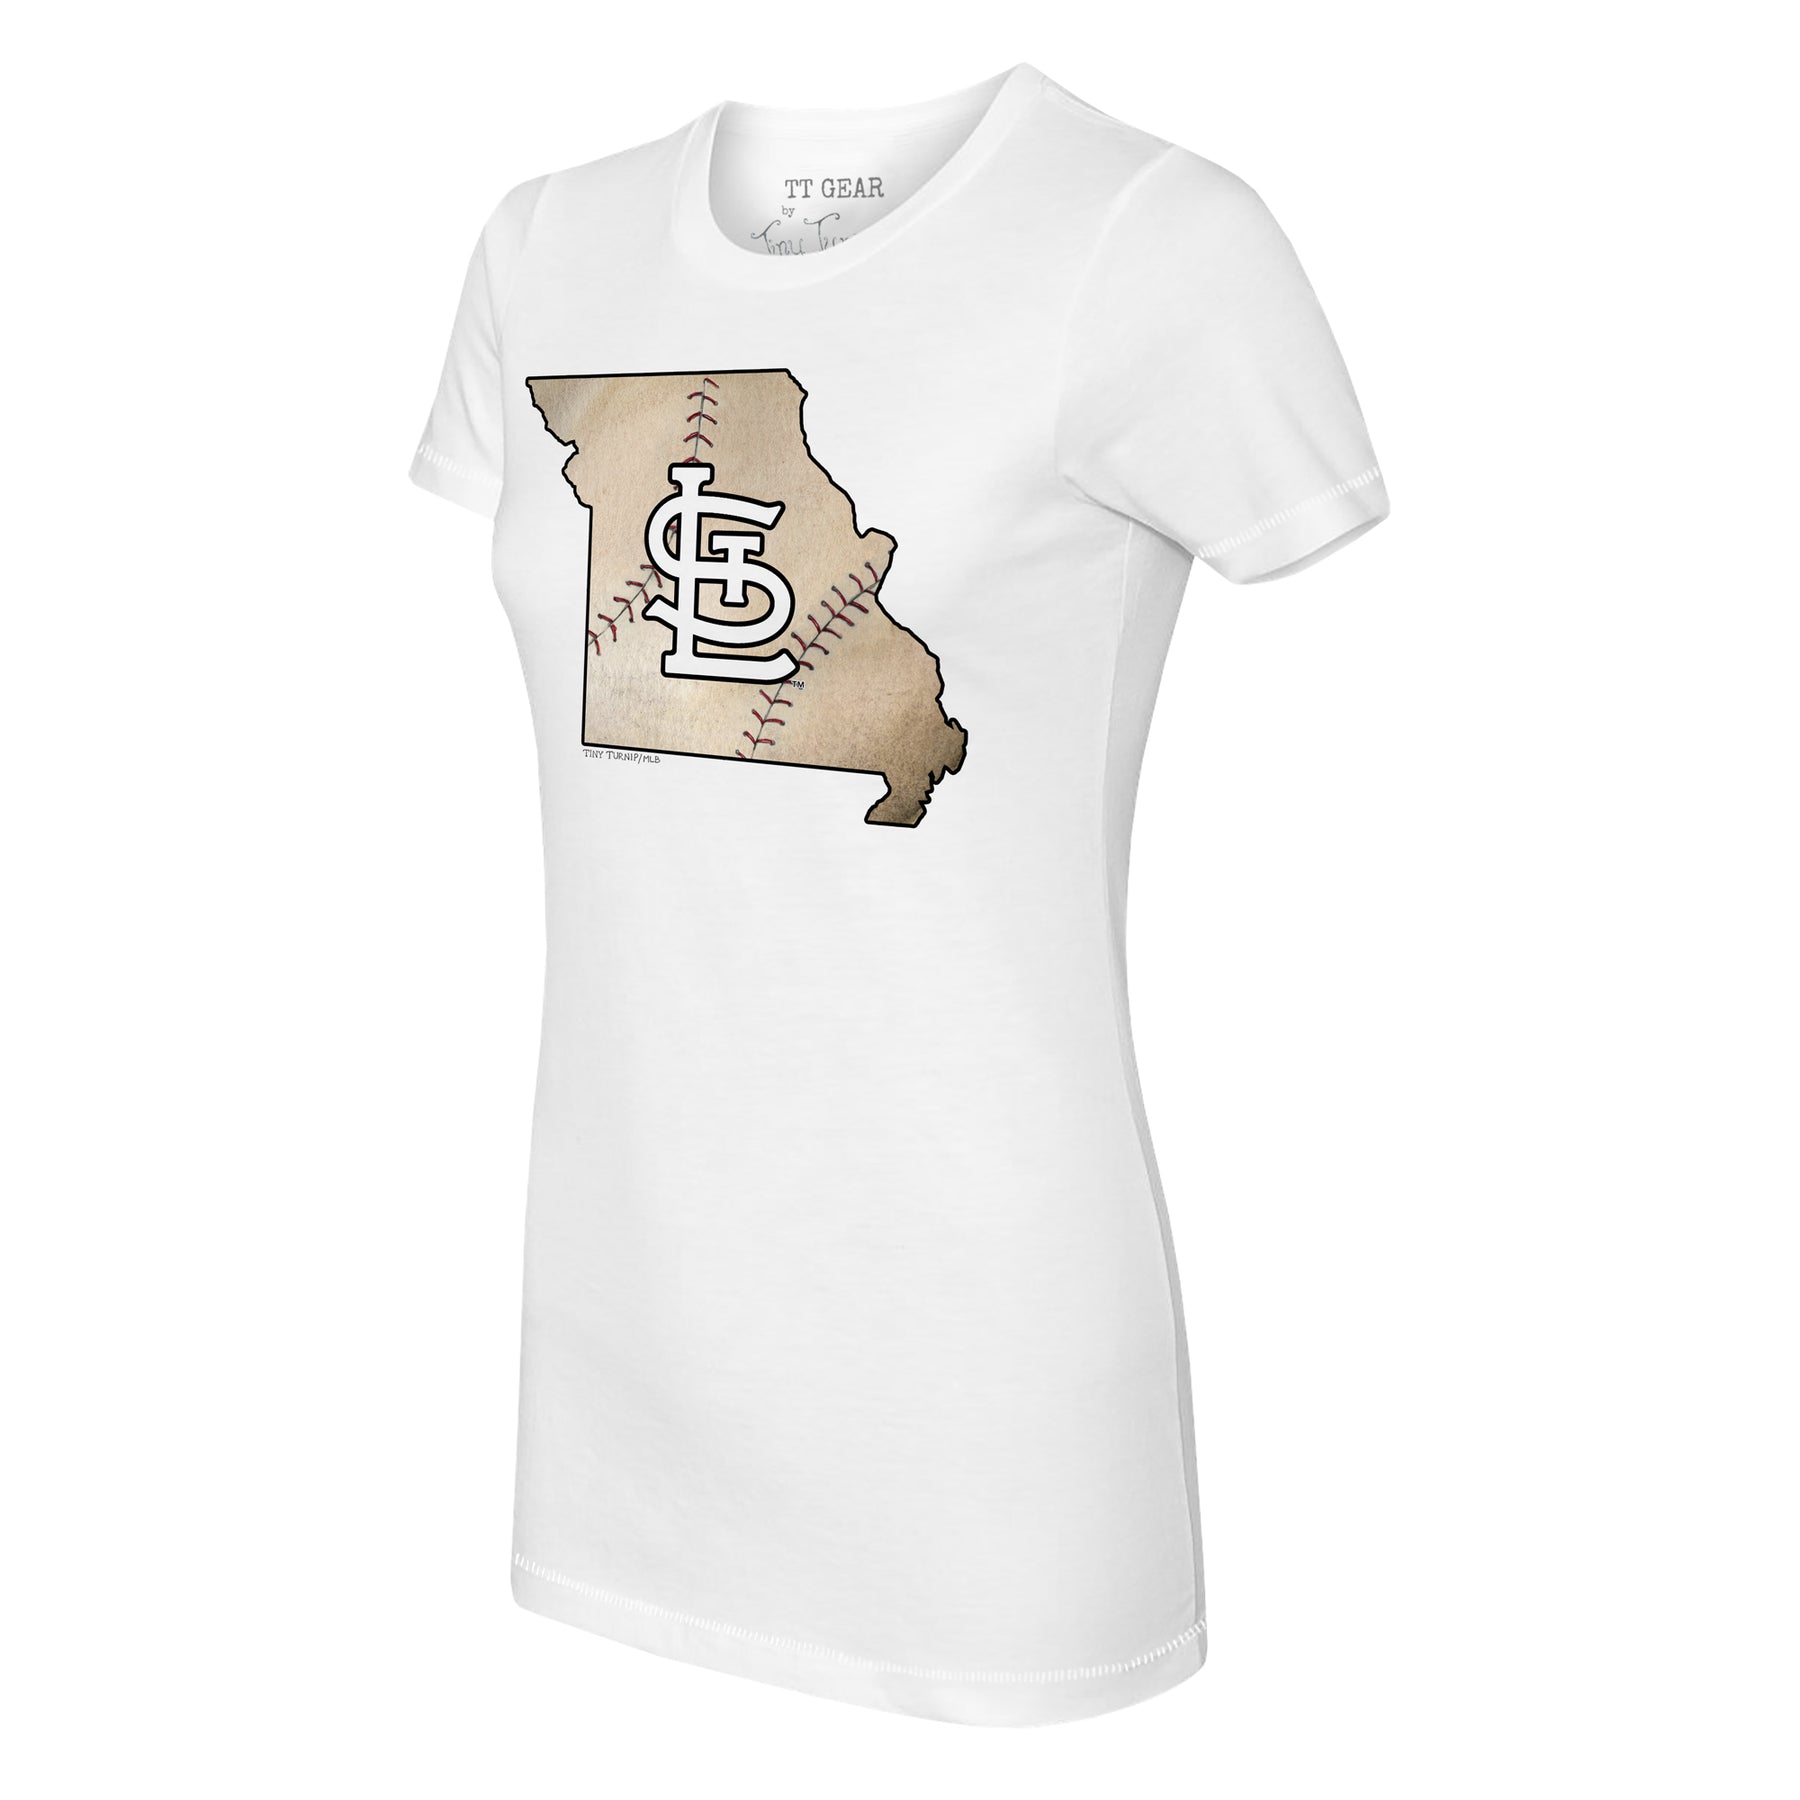 St. Louis Cardinals Slugger Tee Shirt 2T / White